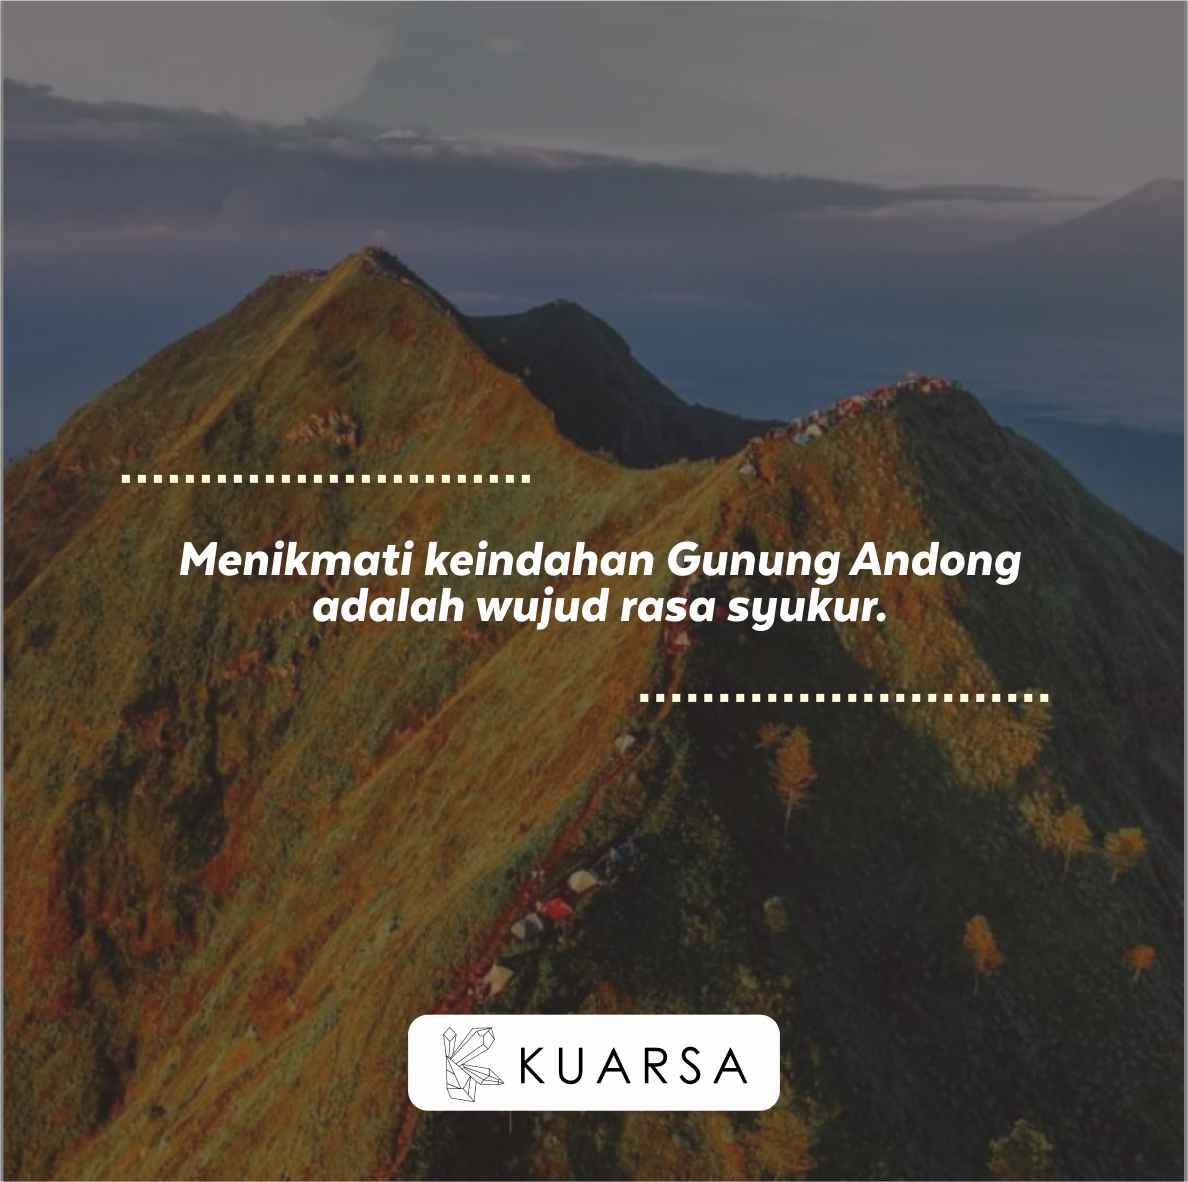 20 Quotes Aesthetic Tentang Gunung Andong 1726 MDPL